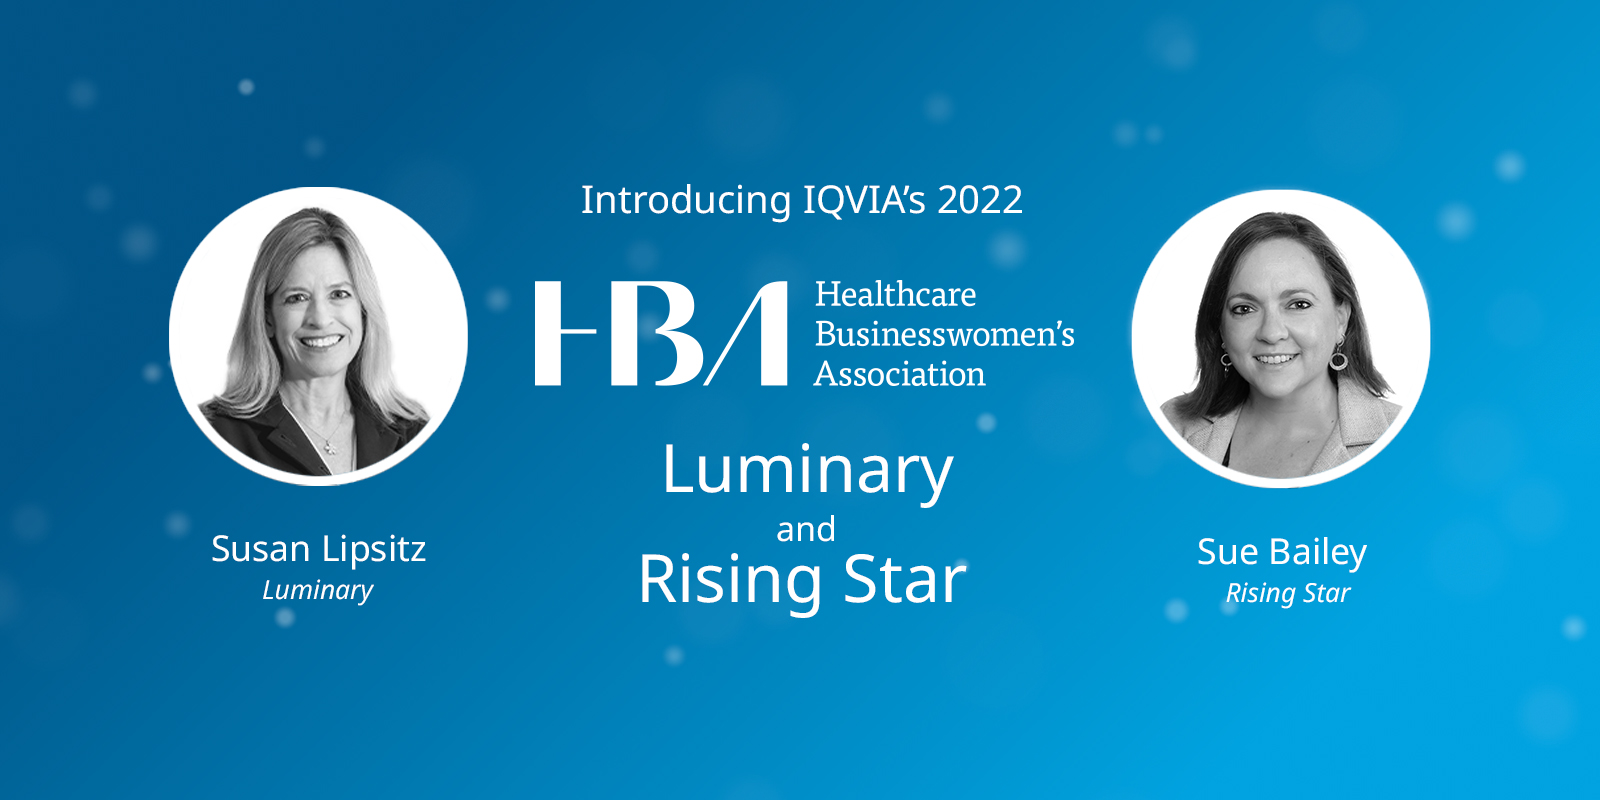 IQVIANs awarded 2022 HBA Luminary and Rising Star